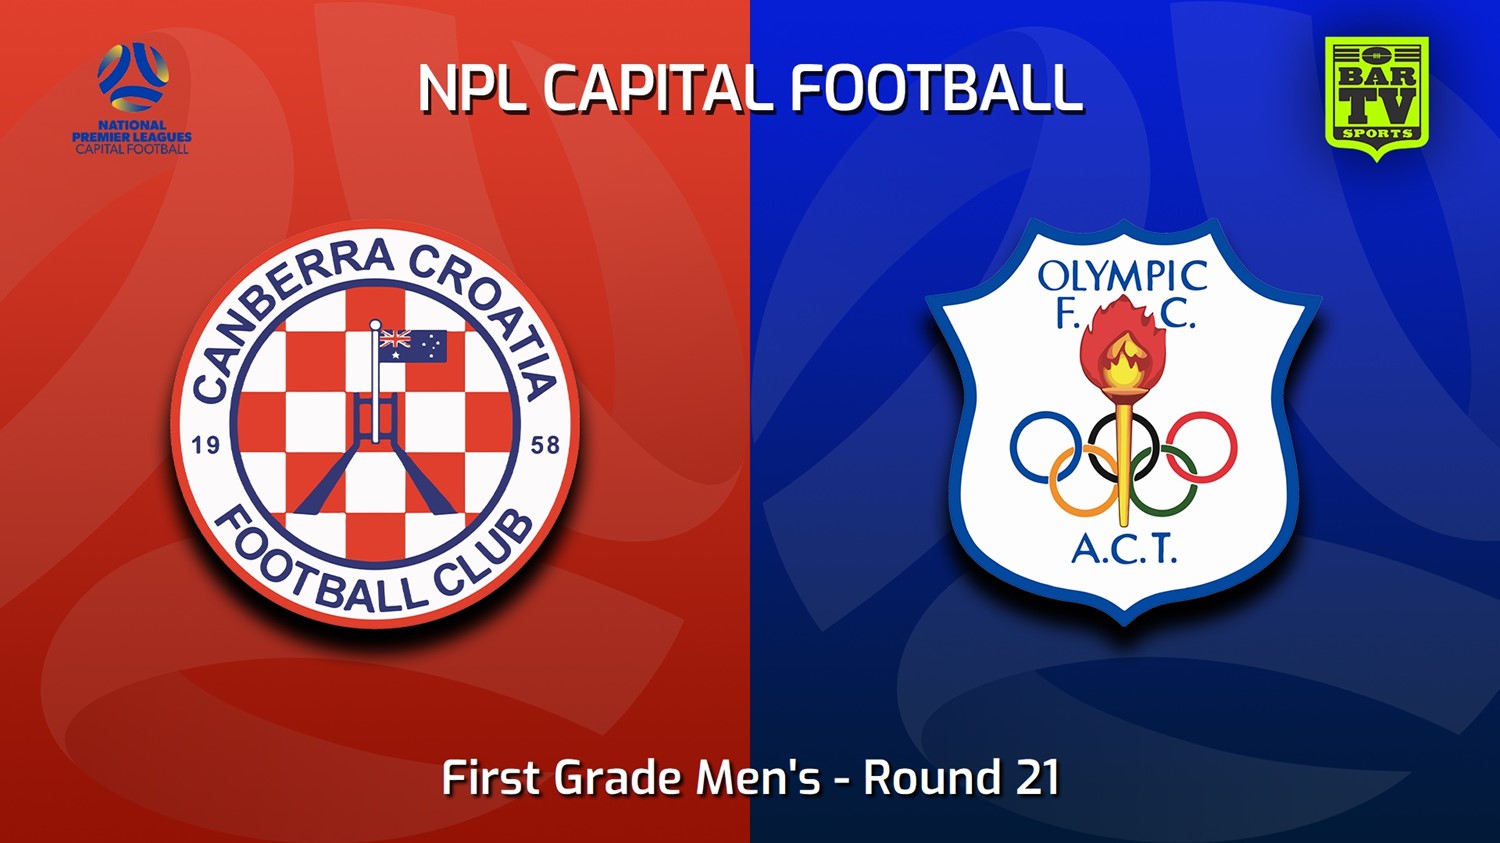 230903-Capital NPL Round 21 - Canberra Croatia FC v Canberra Olympic FC Minigame Slate Image